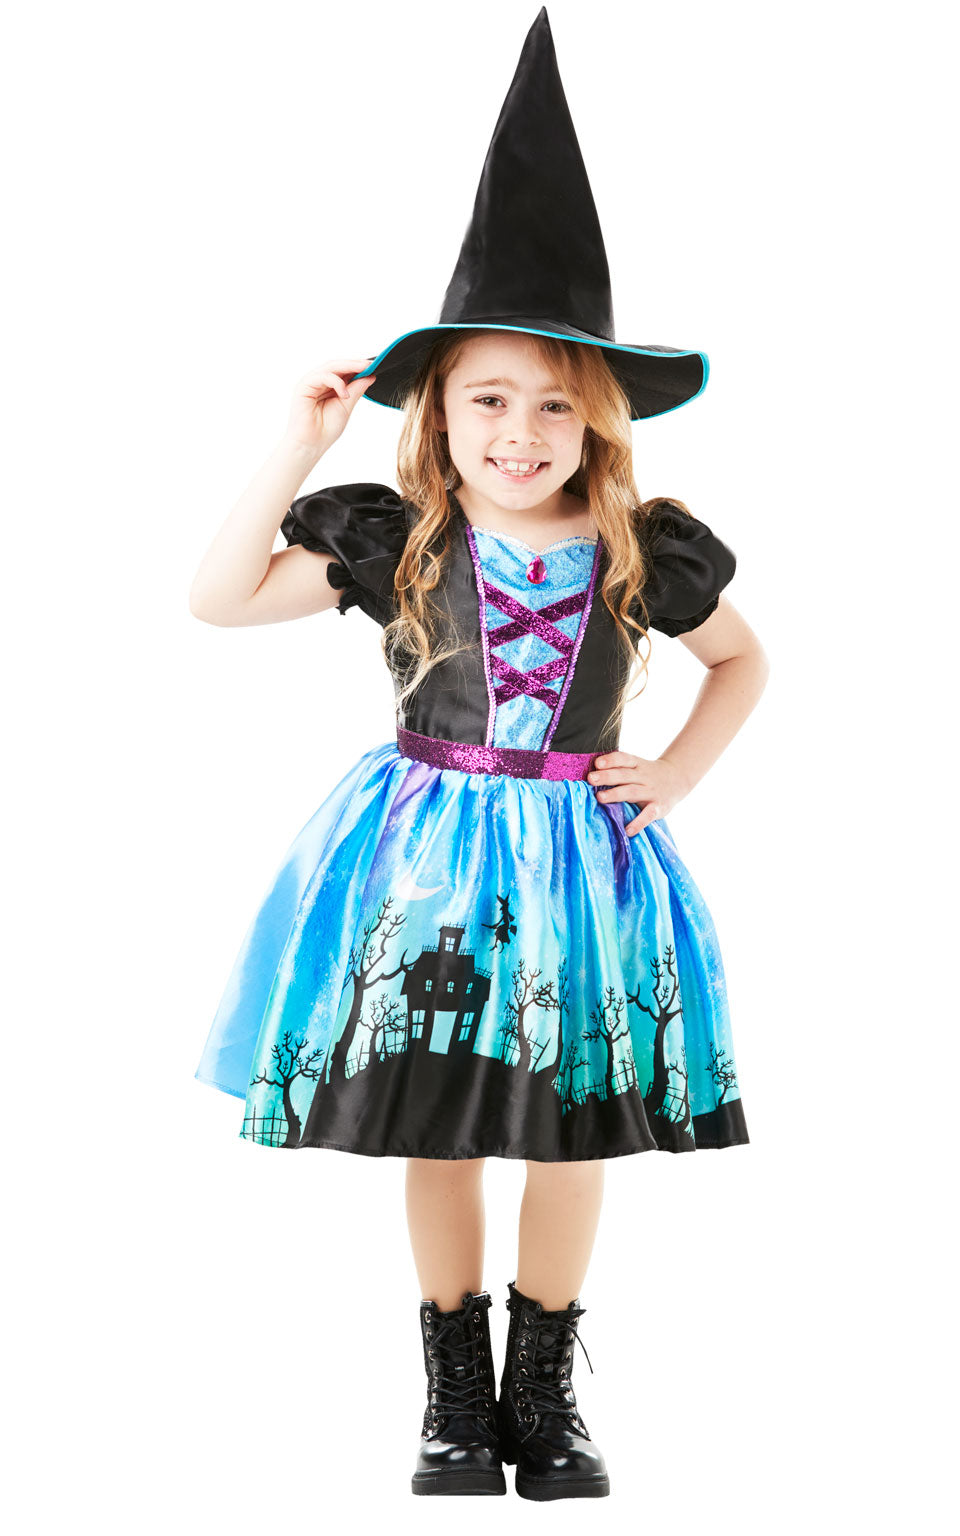 Children's Moonlight Witch costume